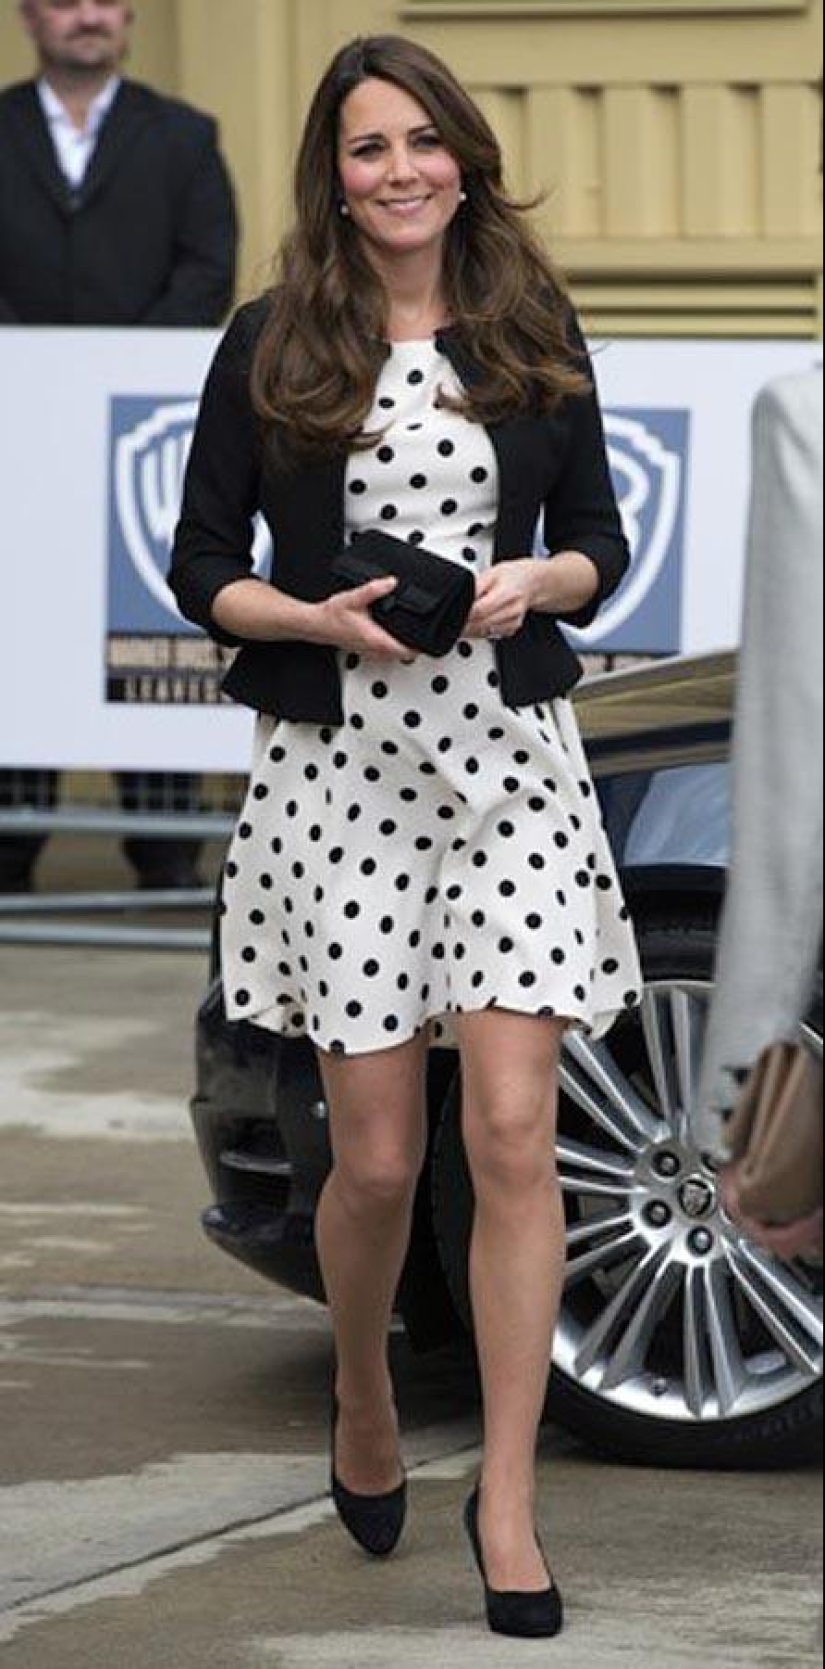 15 Pregnant Kate Middleton Appearances in Public